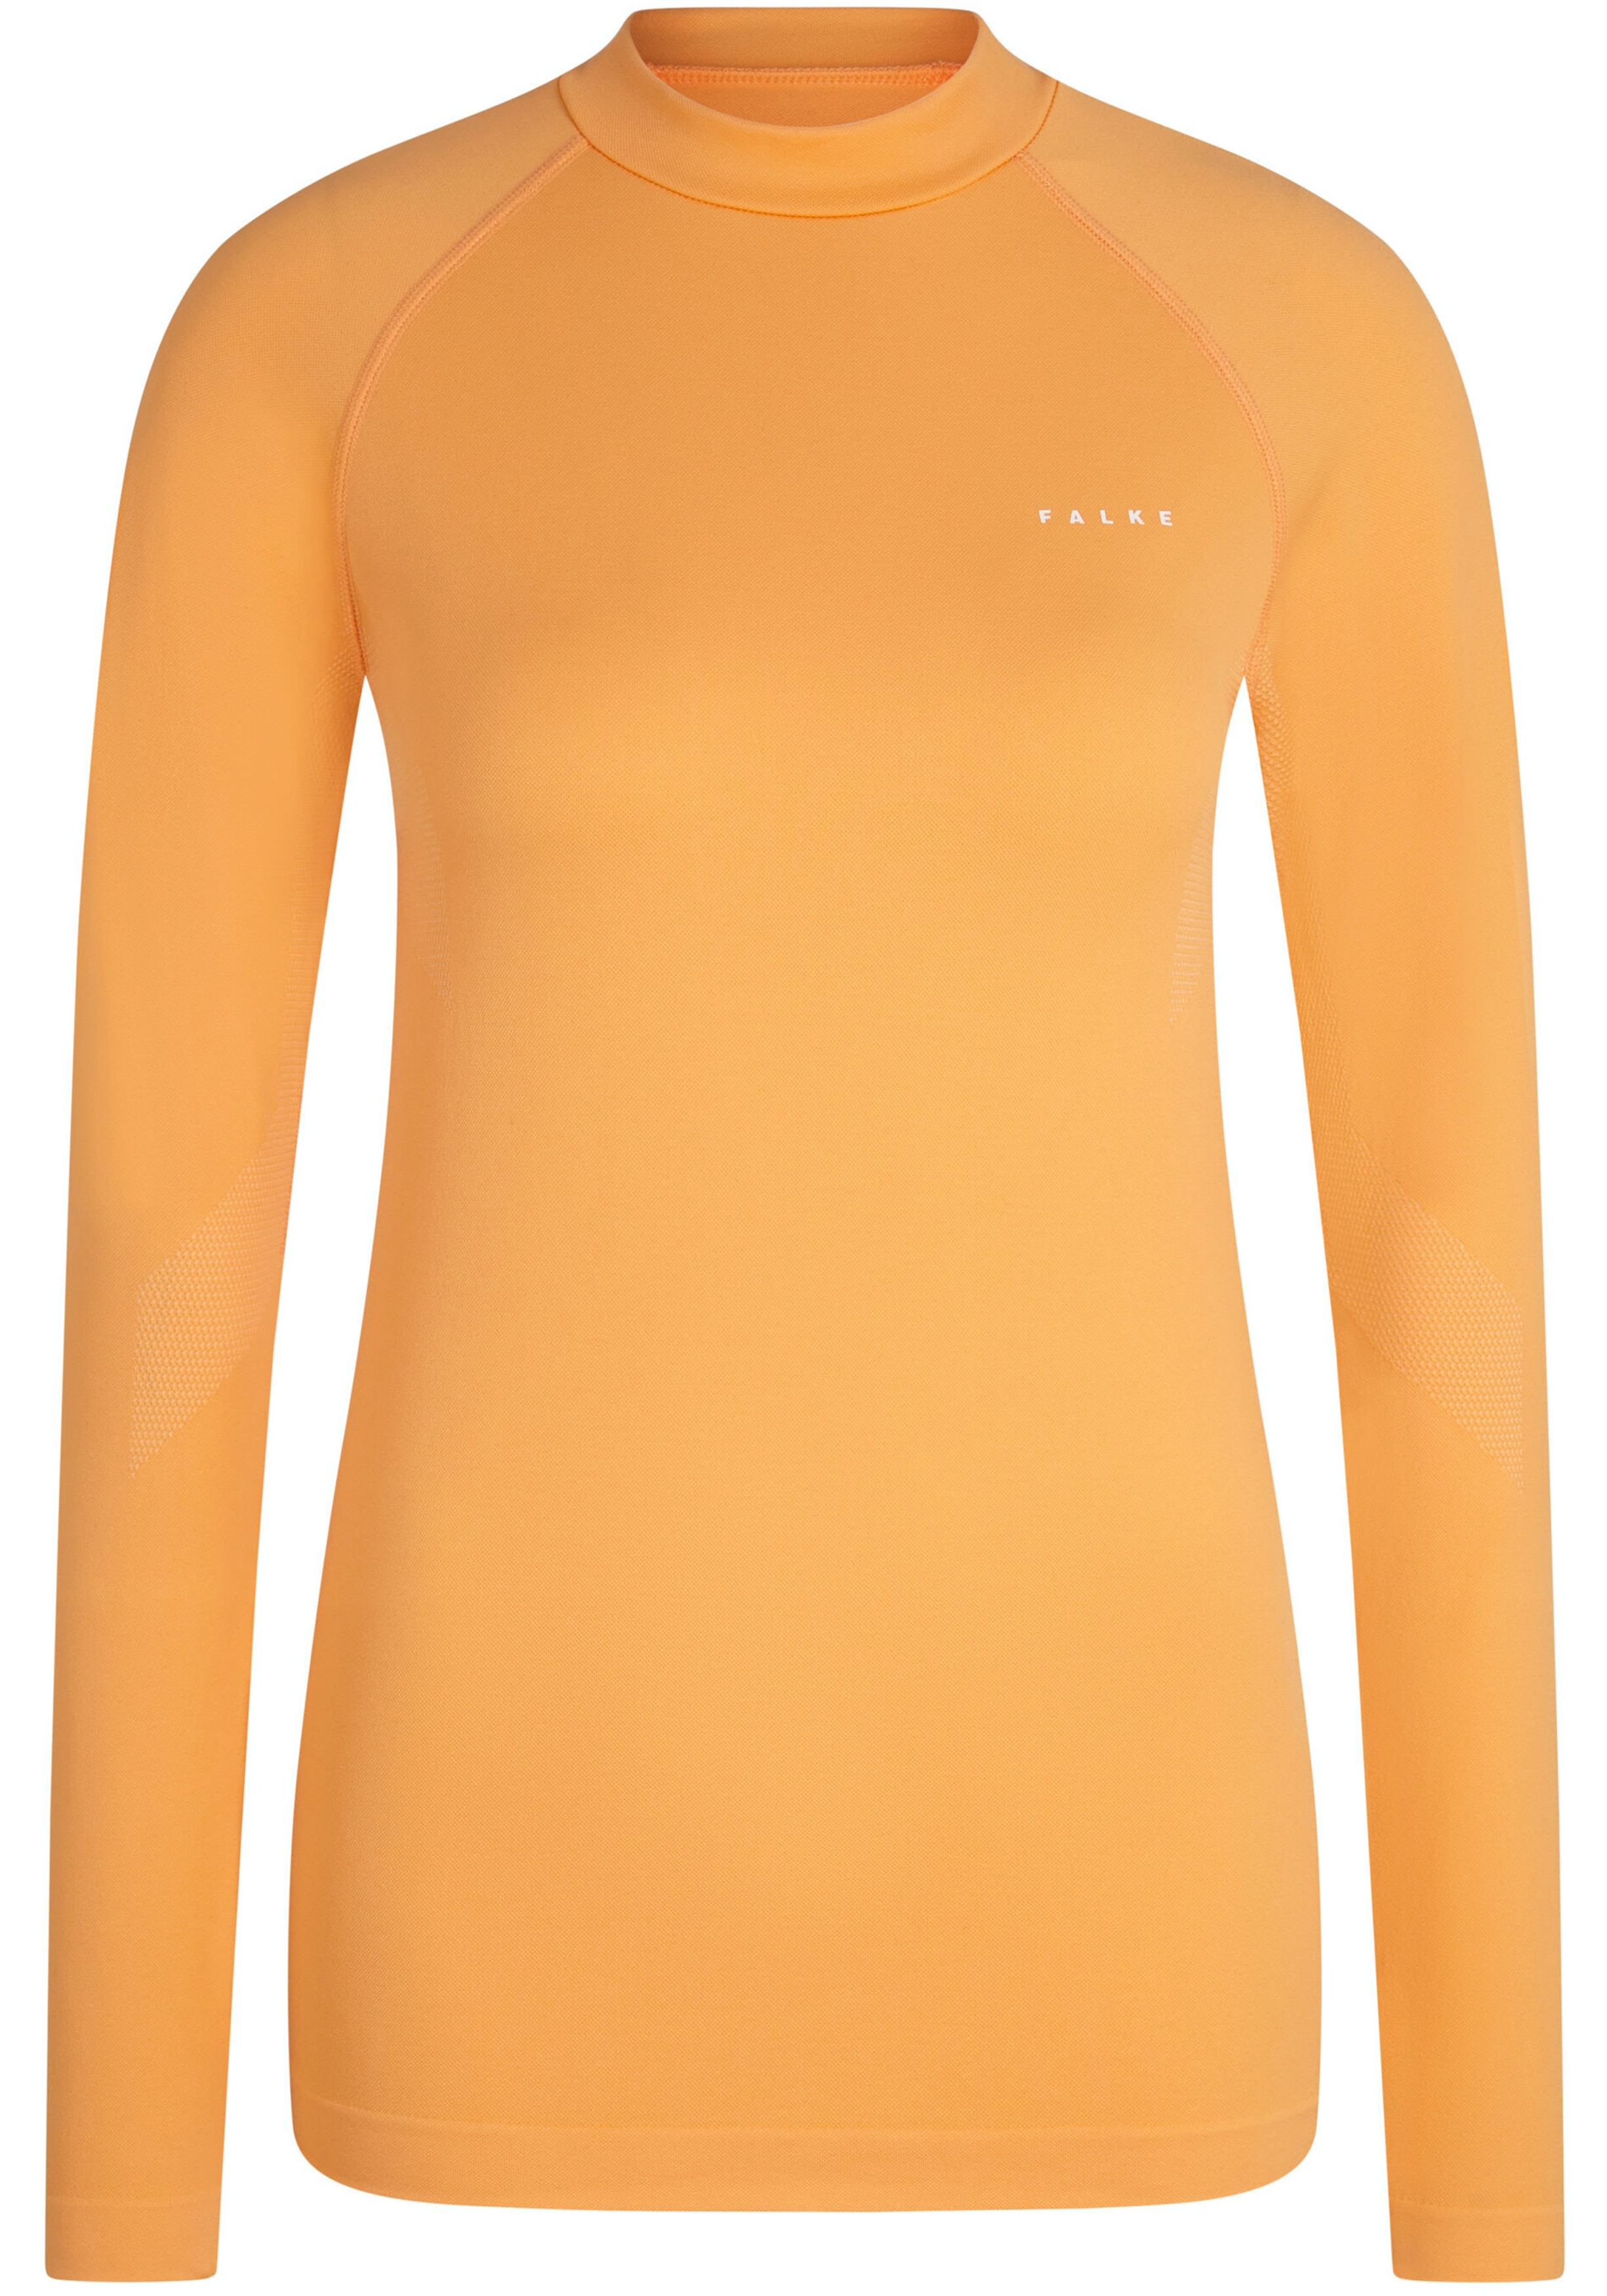 FALKE dames lange mouw shirt Maximum Warm, thermoshirt, oranje (orangette)